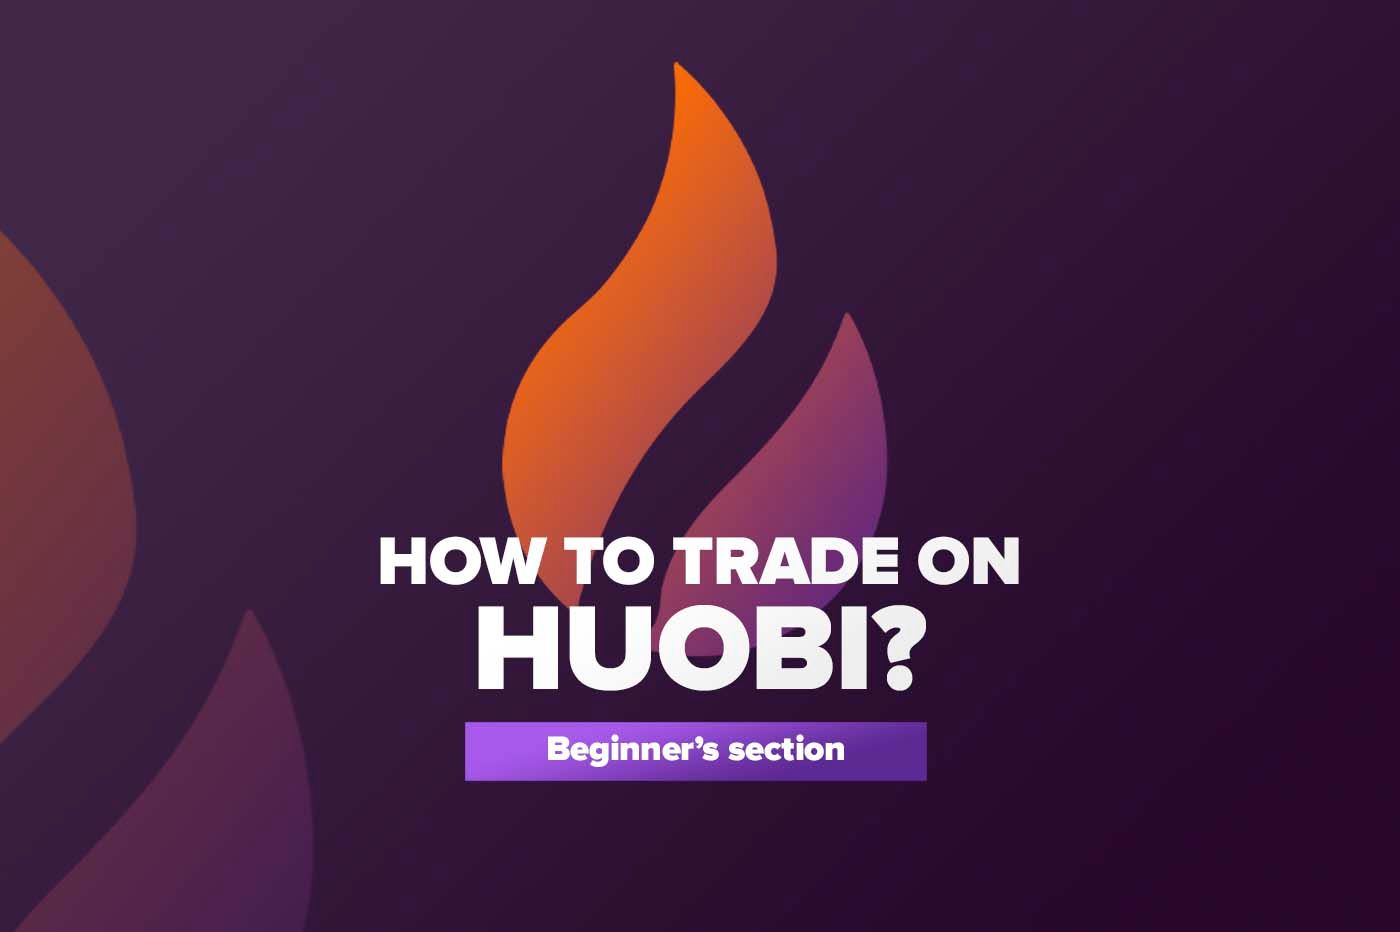 How to trade on Huobi?